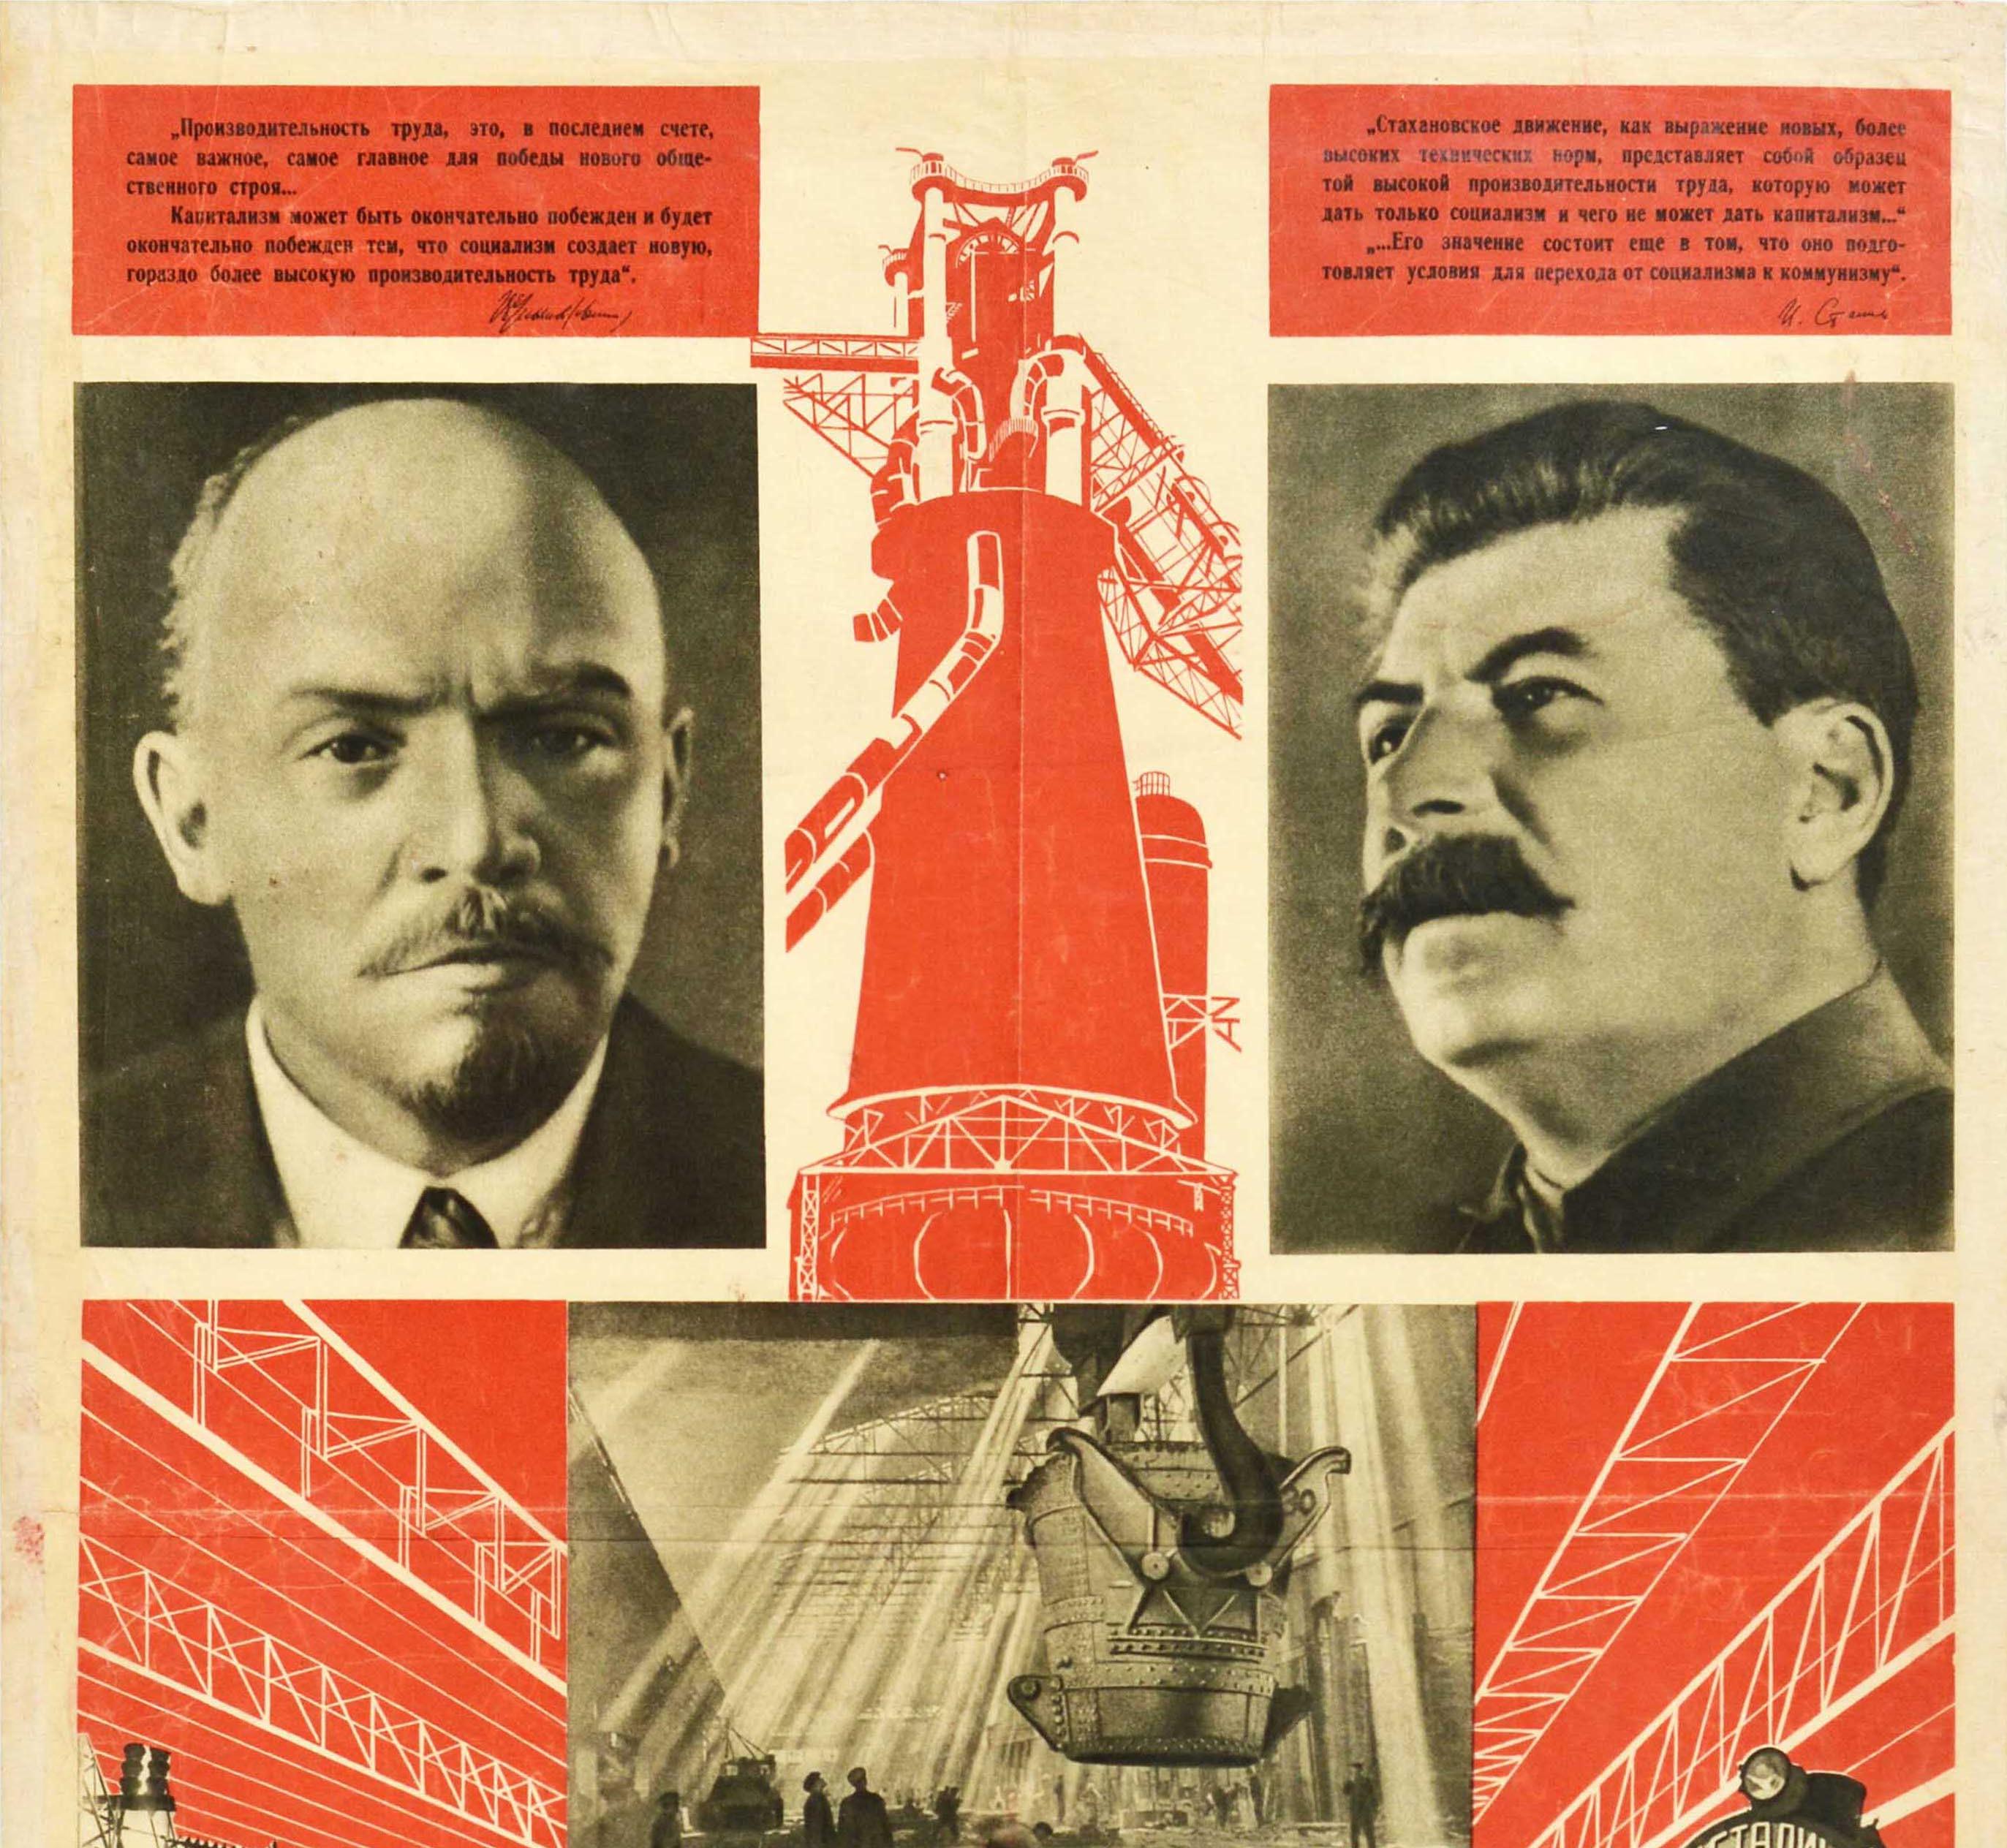 Originales Original-Vintage- Propaganda-Poster, sozialistische Industrie, UdSSR, Lenin Stalin, Fabrik – Print von D. Moor